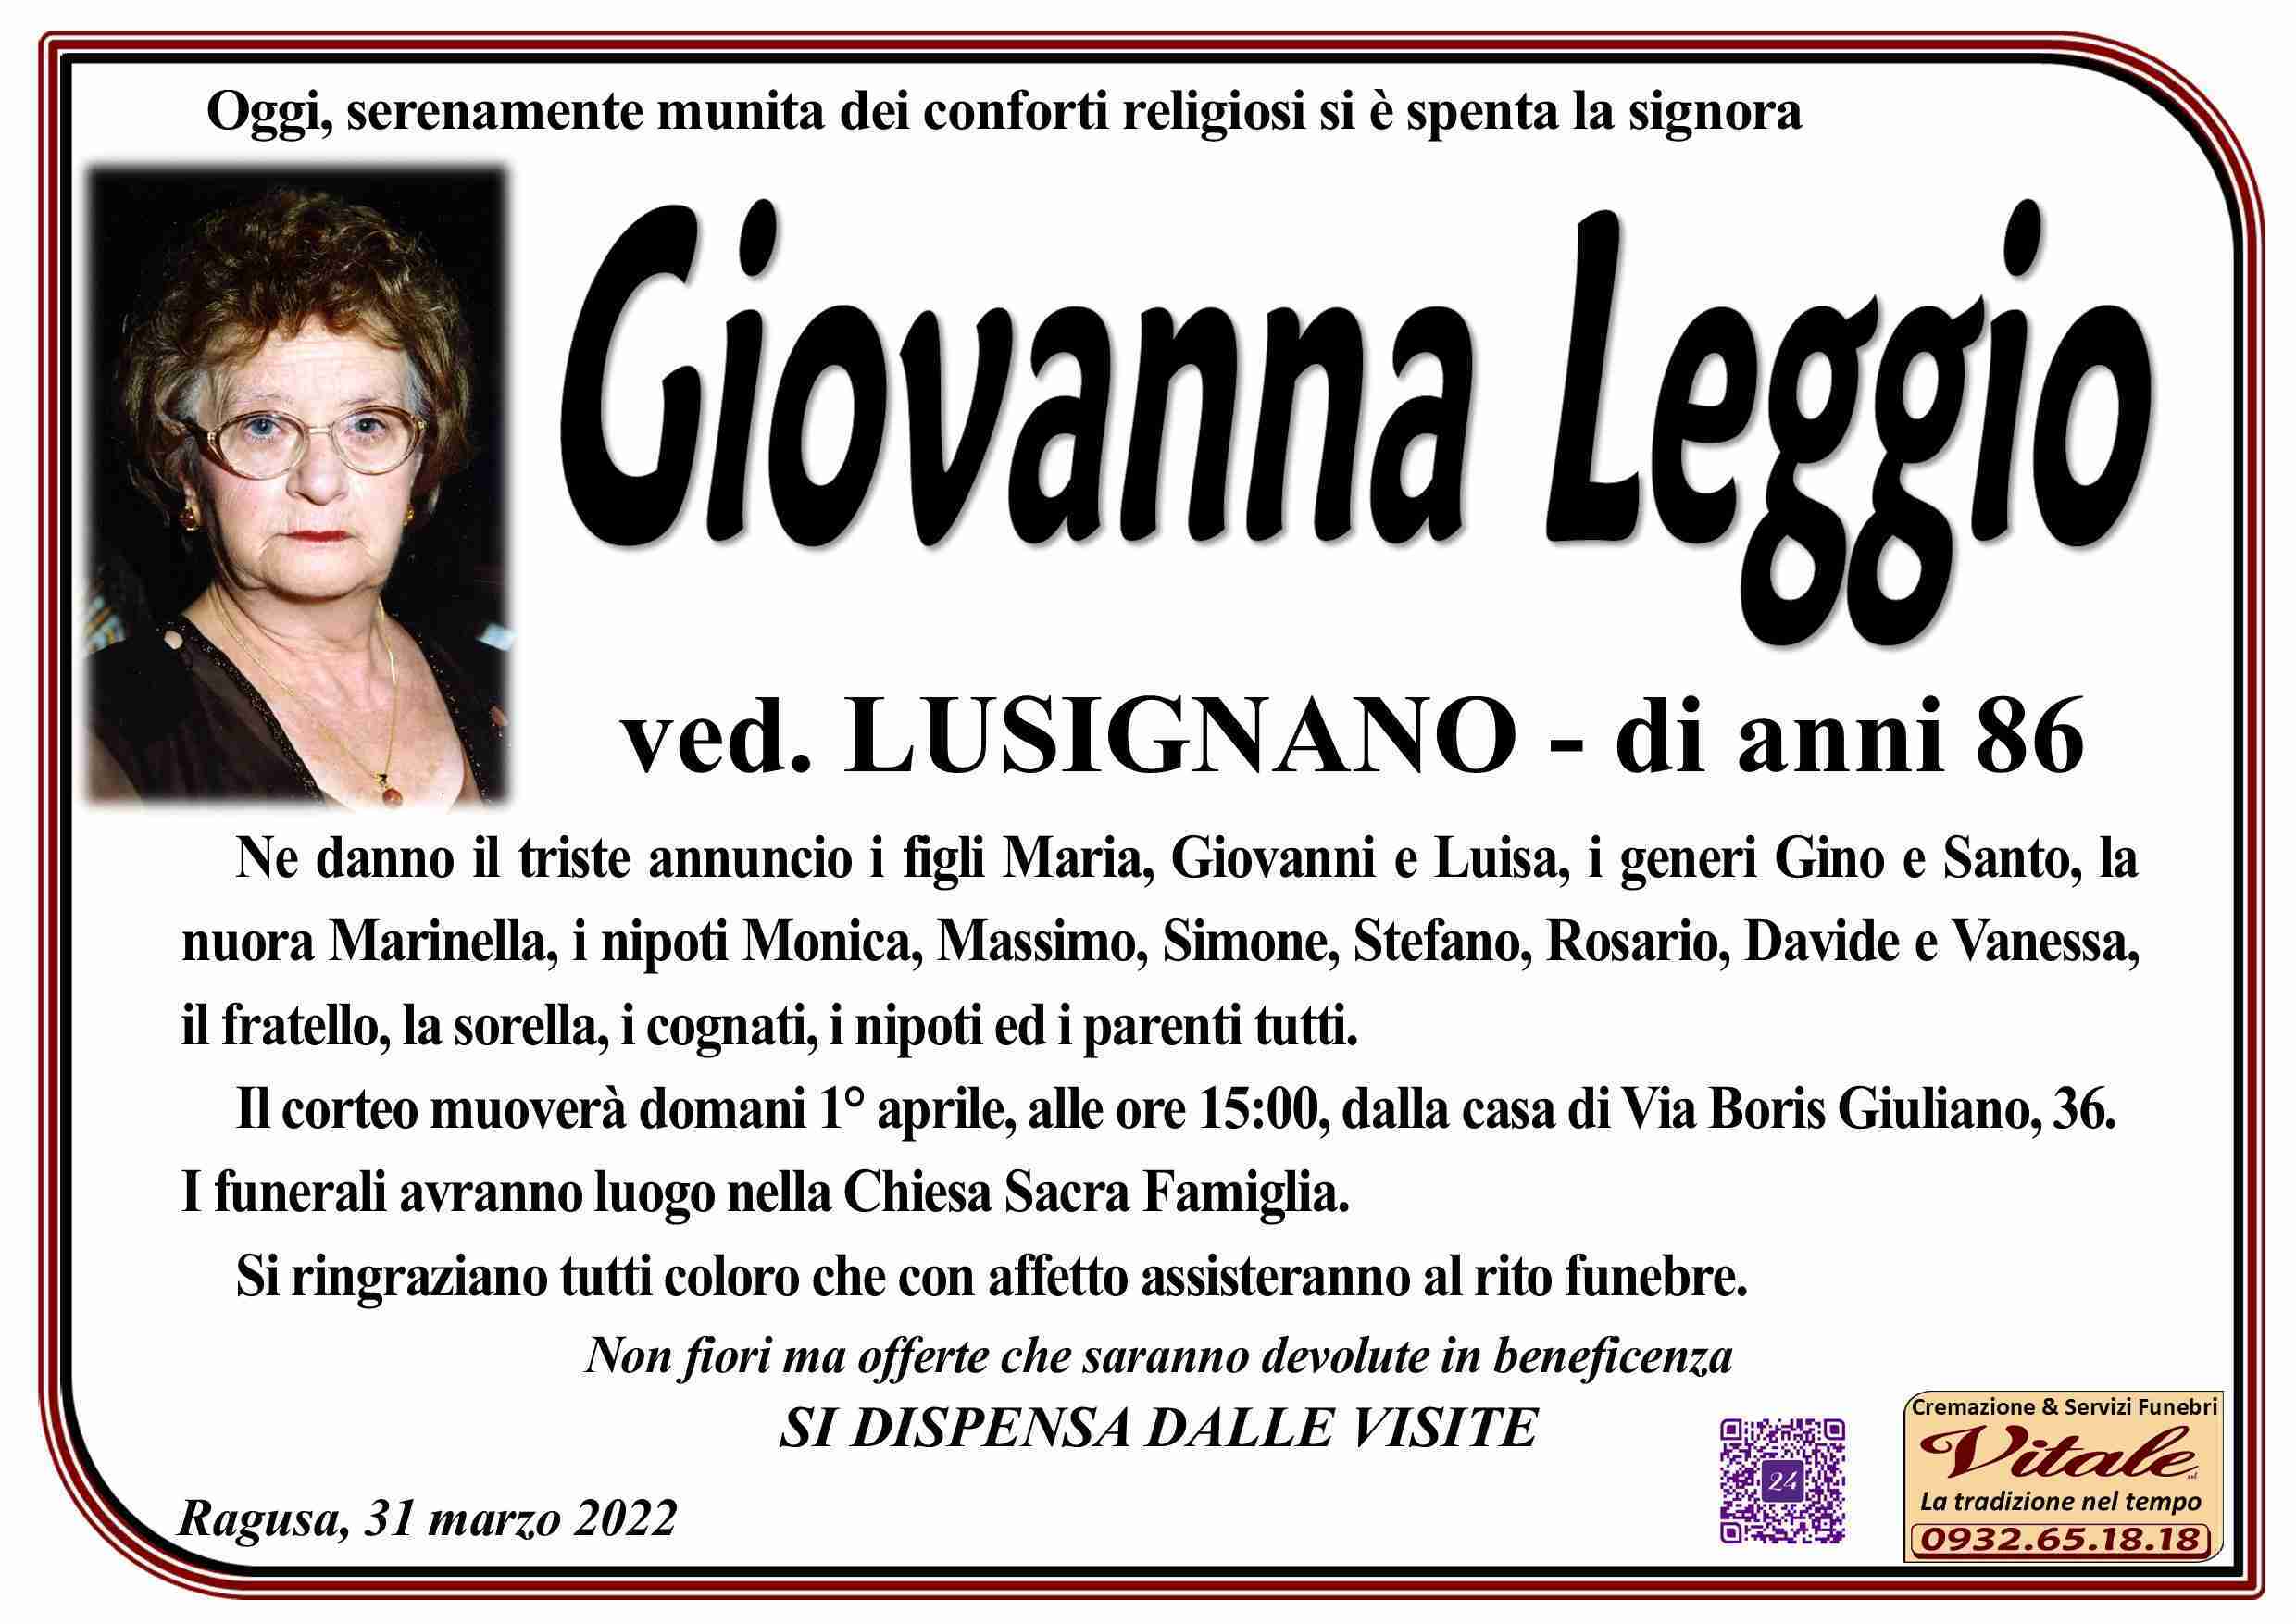 Giovanna Leggio